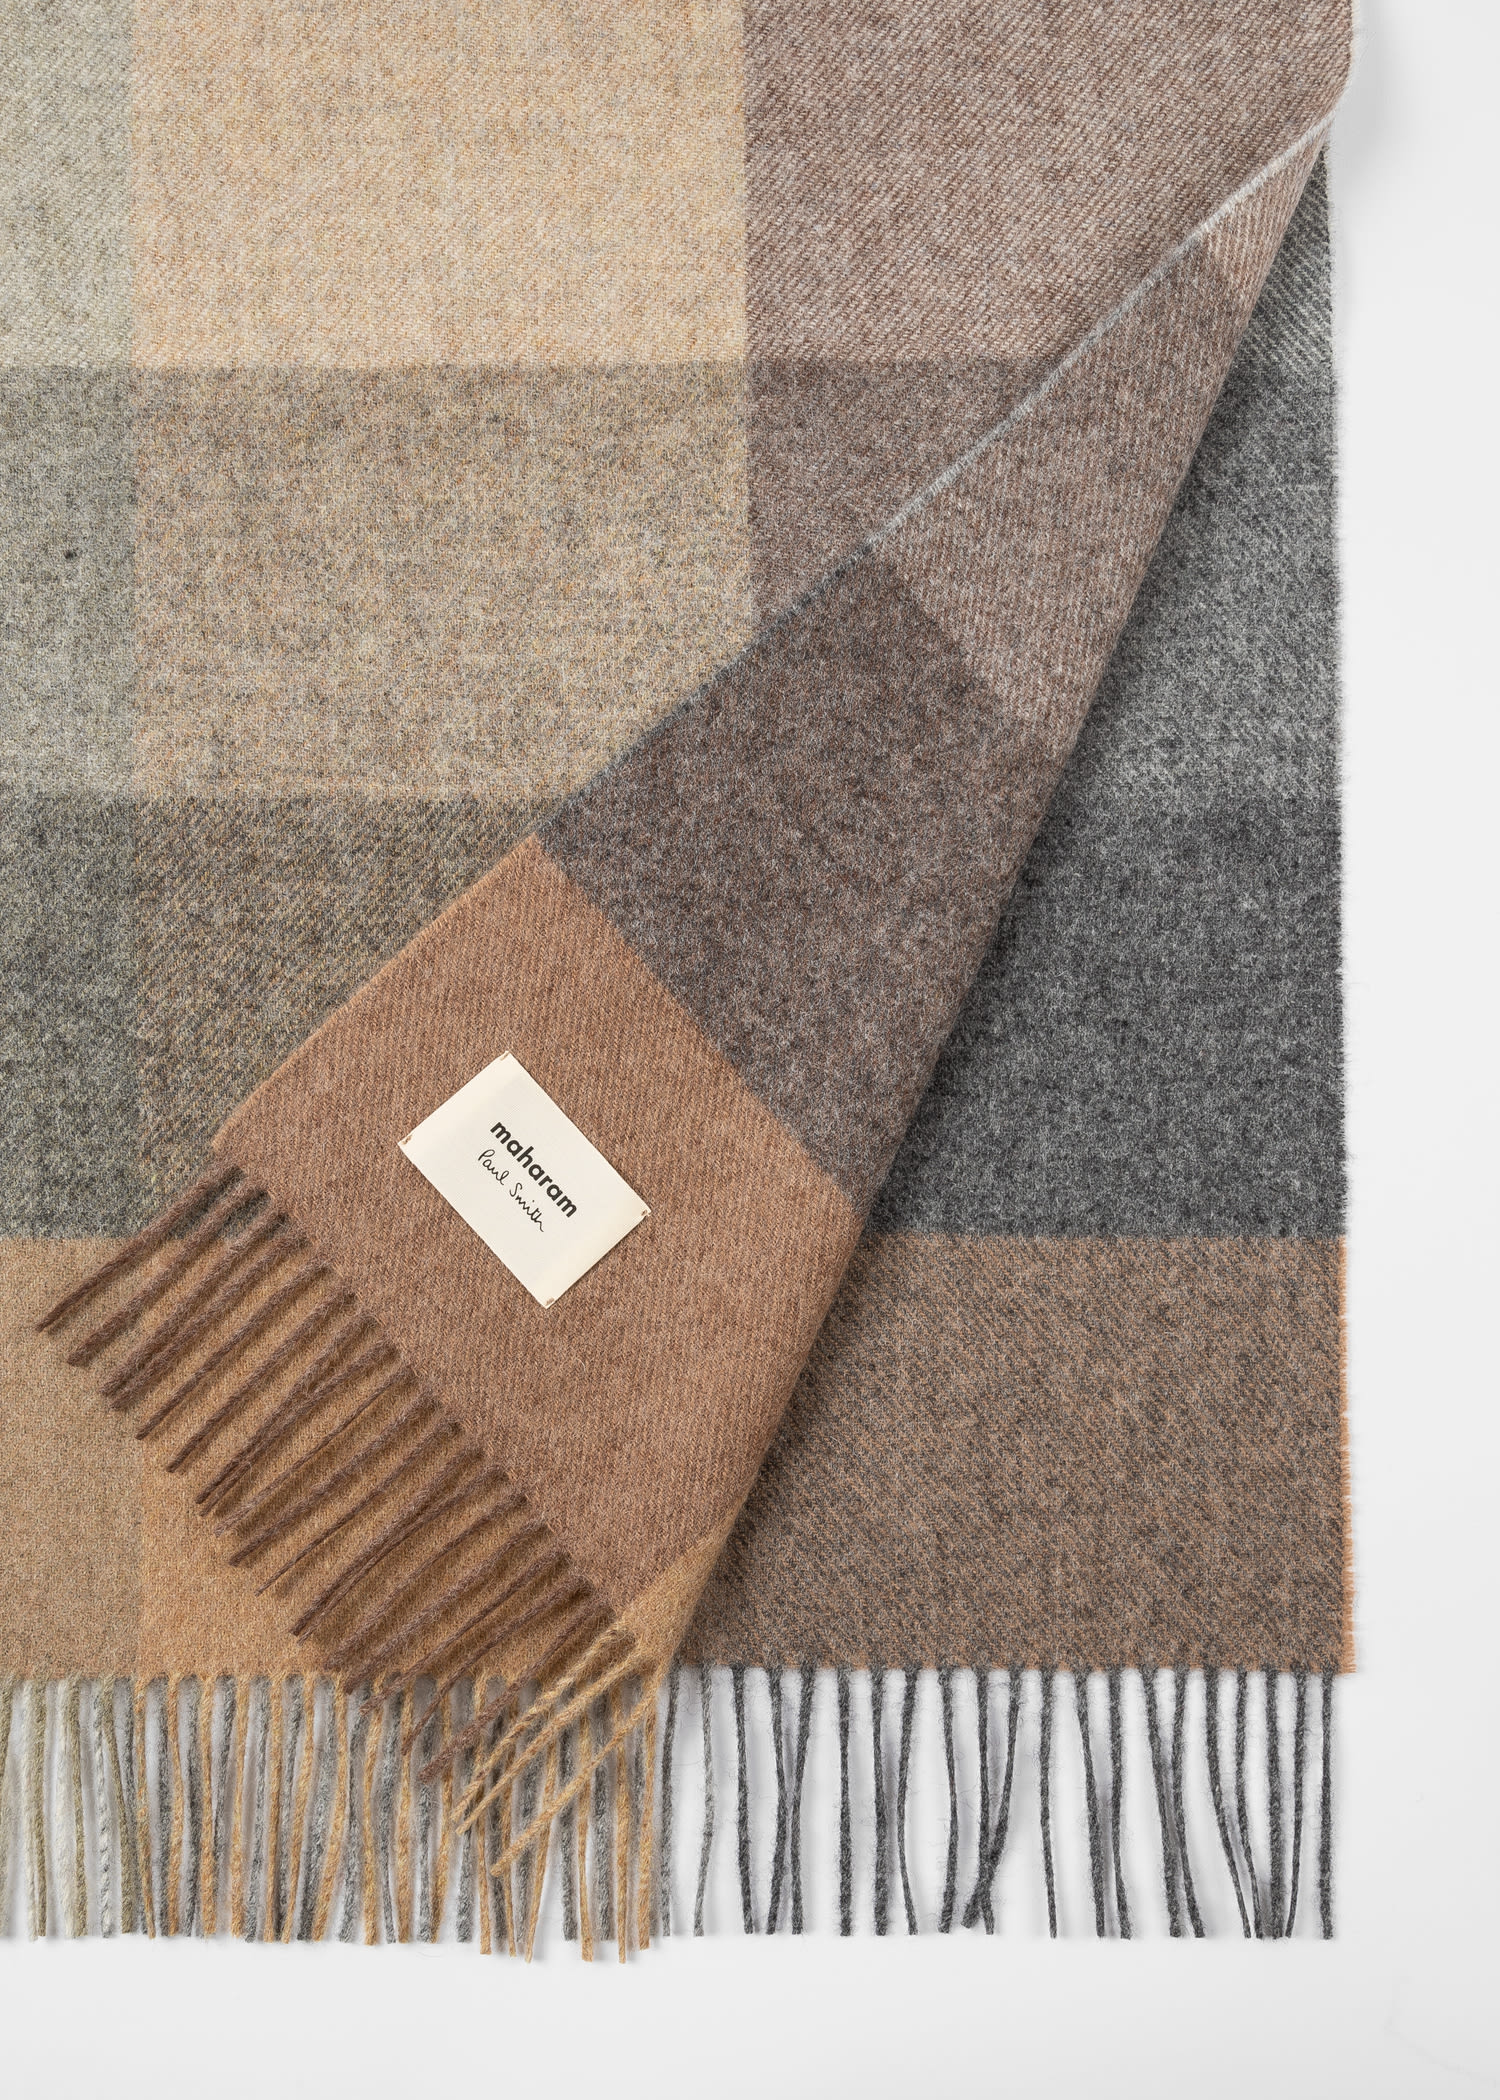 Maharam + Paul Smith - Birch Wool Check Blanket - Paul Smith Asia